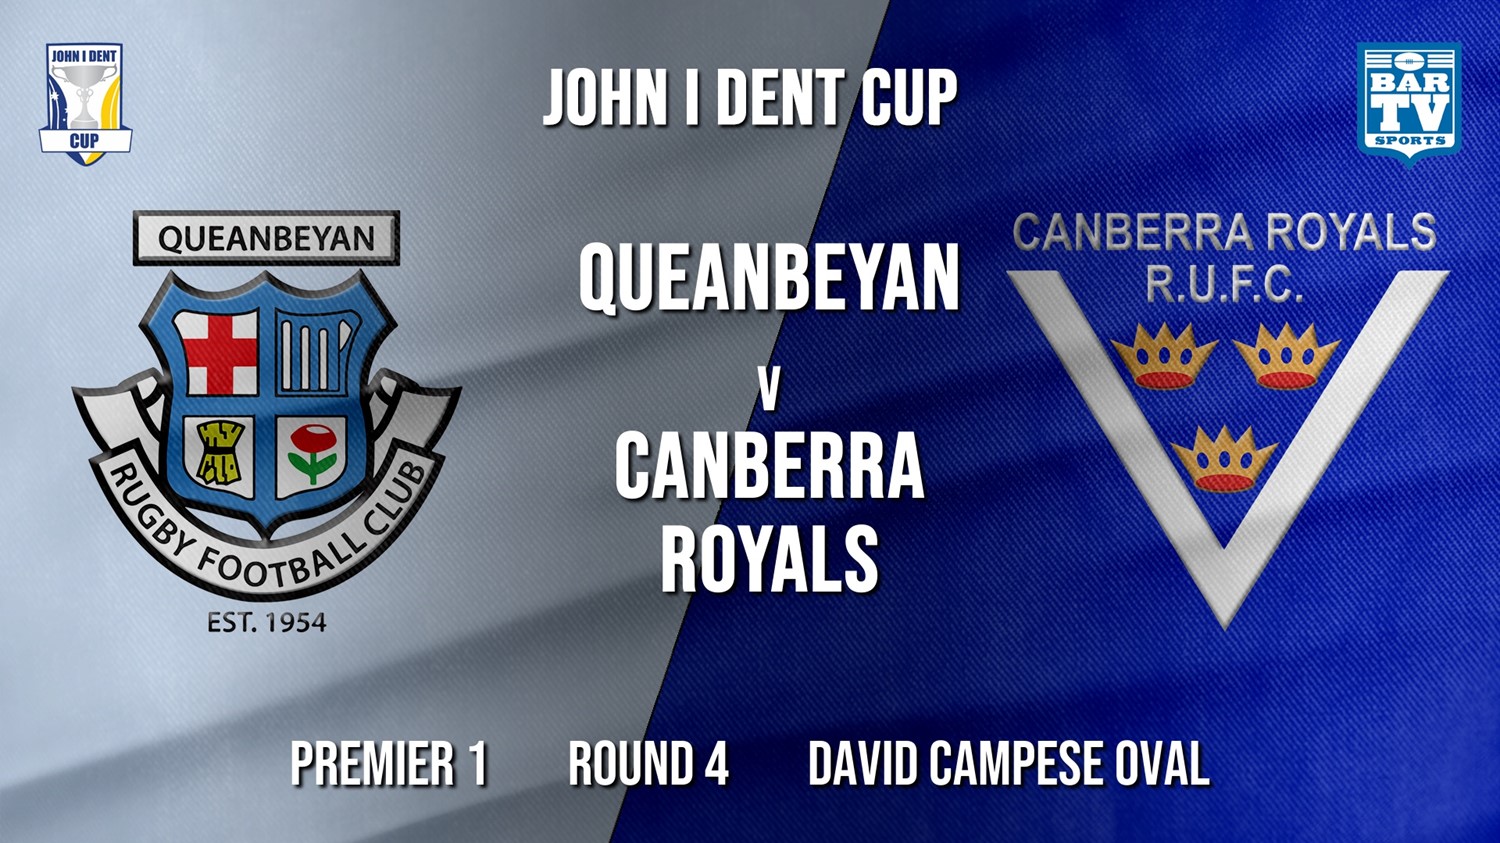 John I Dent Round 4 - Premier 1 - Queanbeyan Whites v Canberra Royals Minigame Slate Image